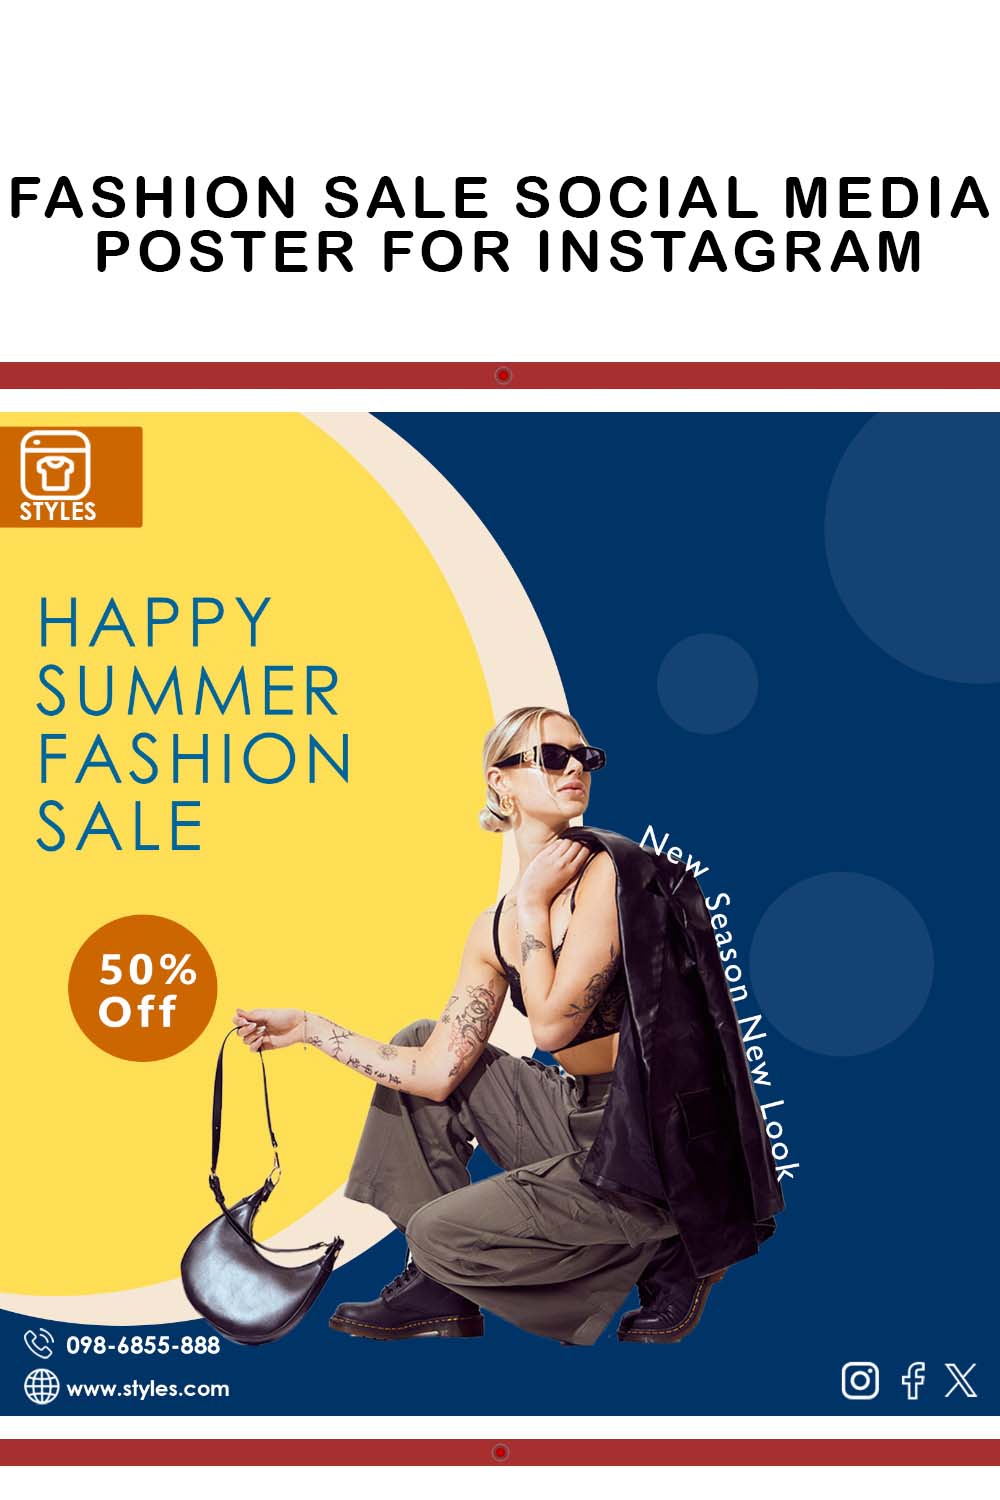 Fashion Sale Social Media Poster pinterest preview image.